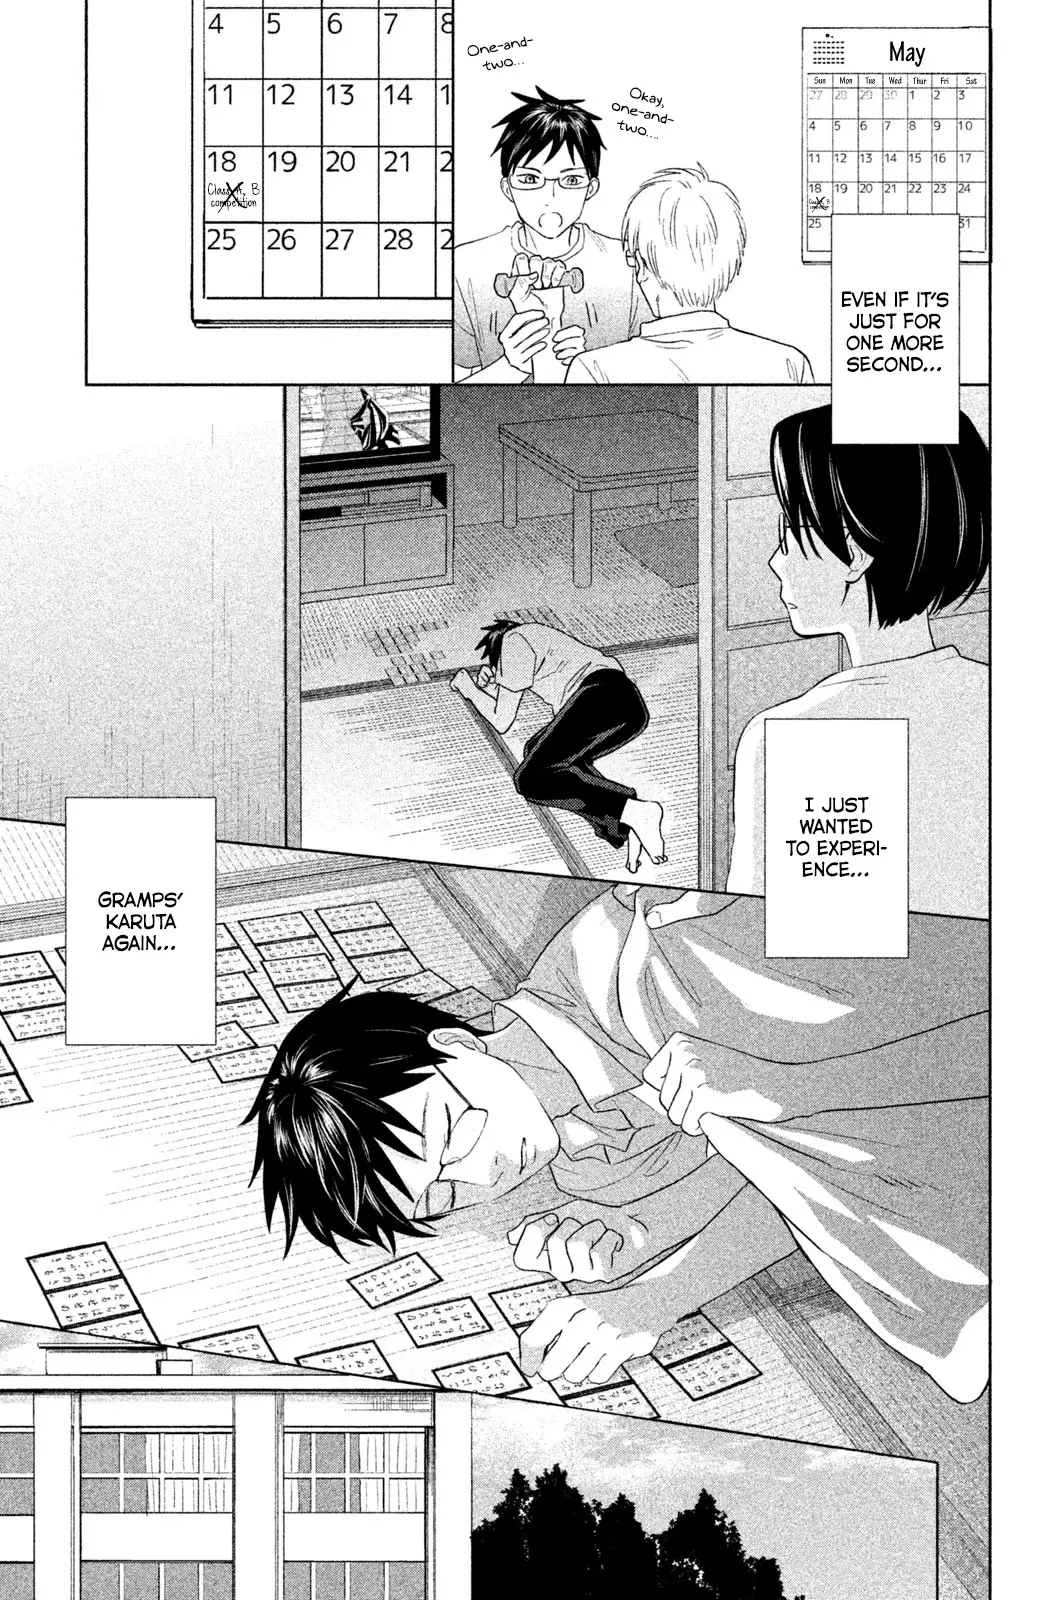 Chihayafuru: Middle School Arc - 9 page 14